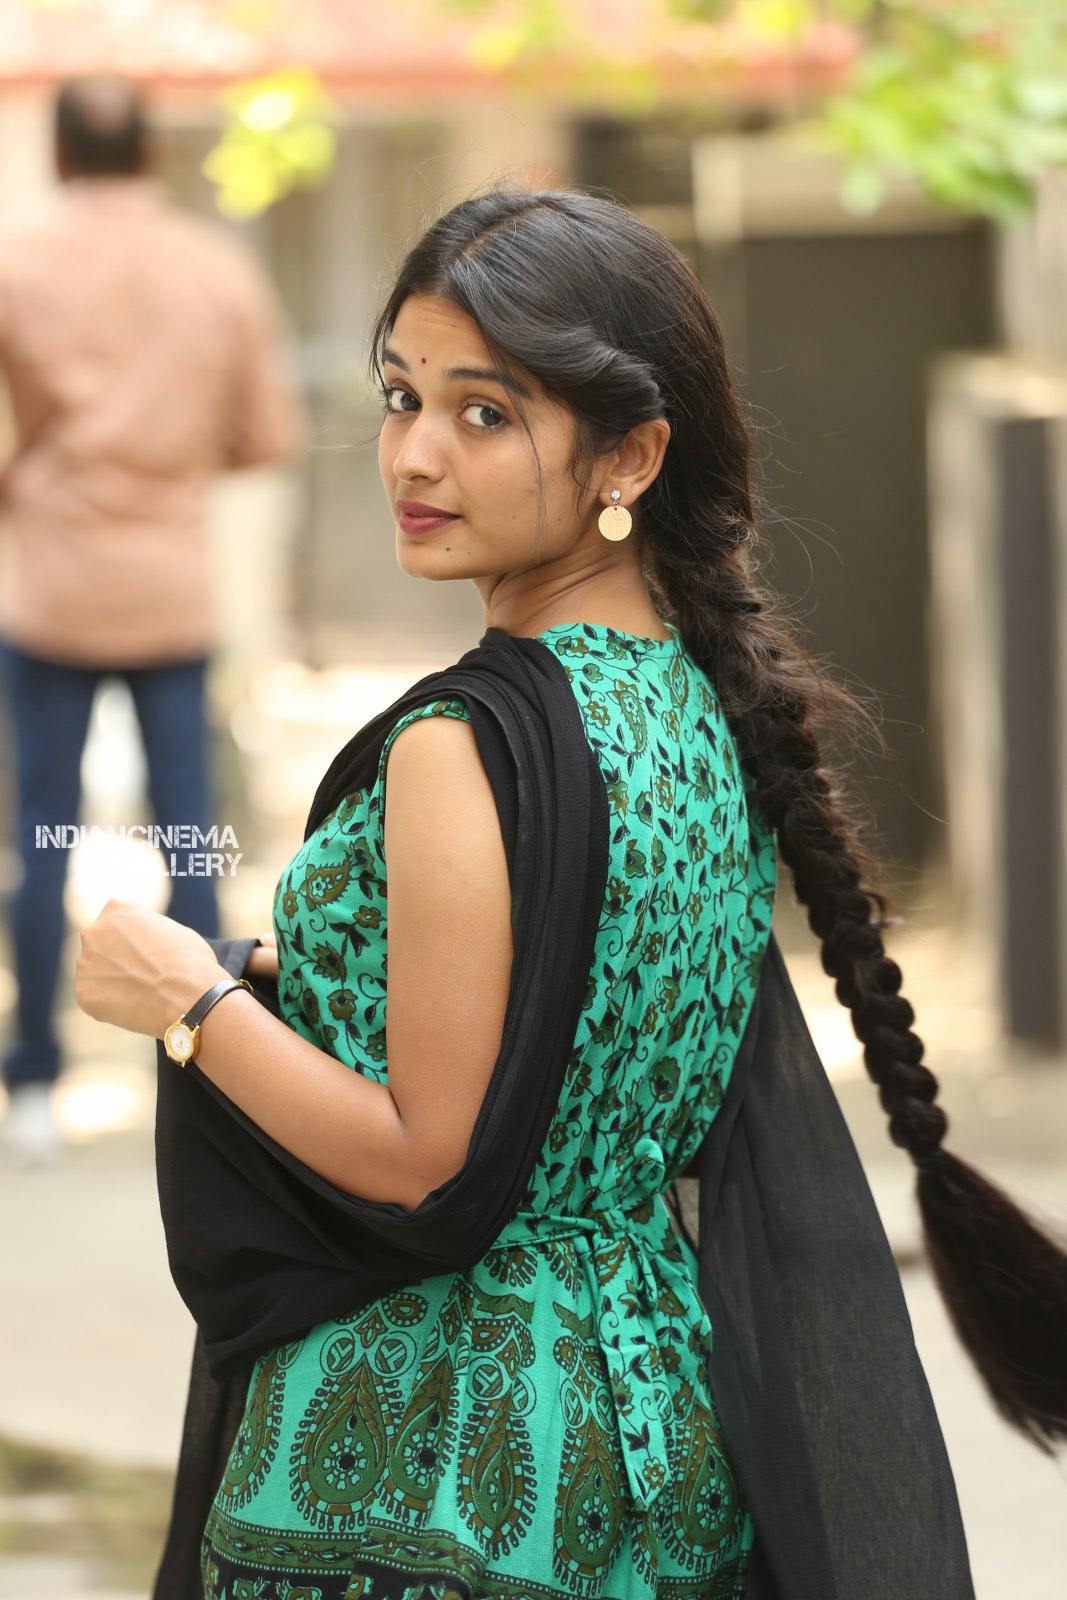 Priyanka-jain-photos-in-green-dress-14.j